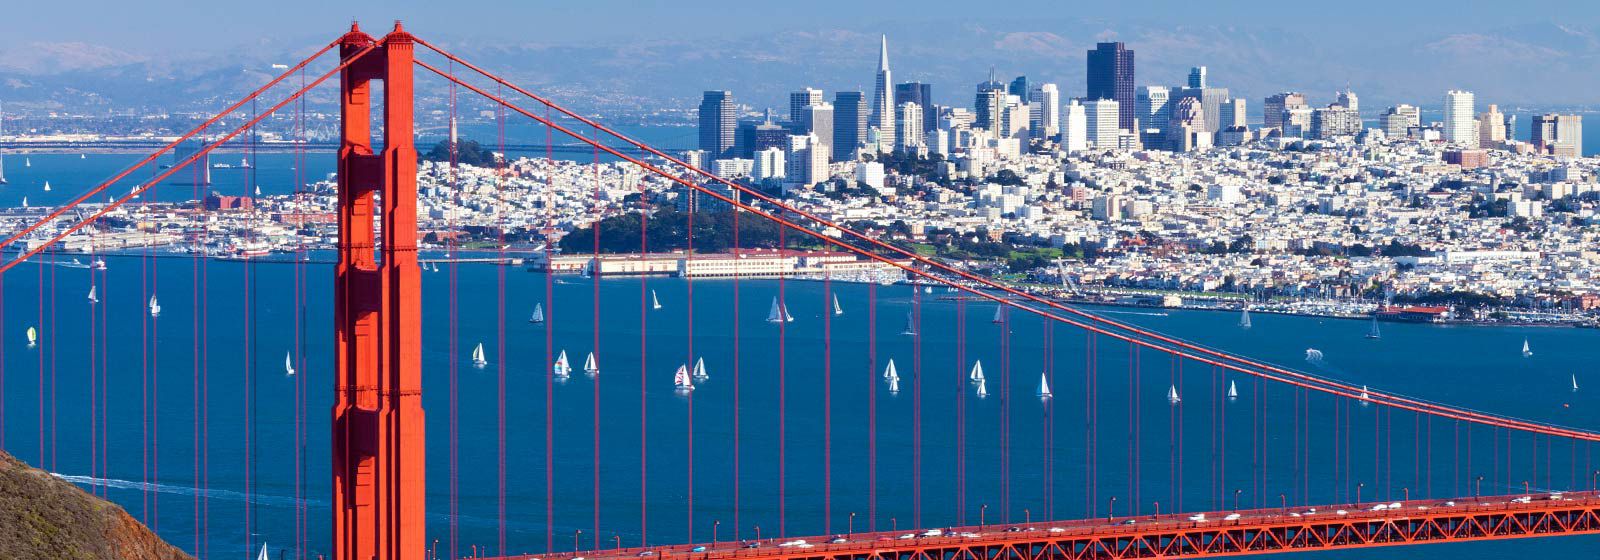 Skyline of San Francisco with Golden Gate Bridge in foreground